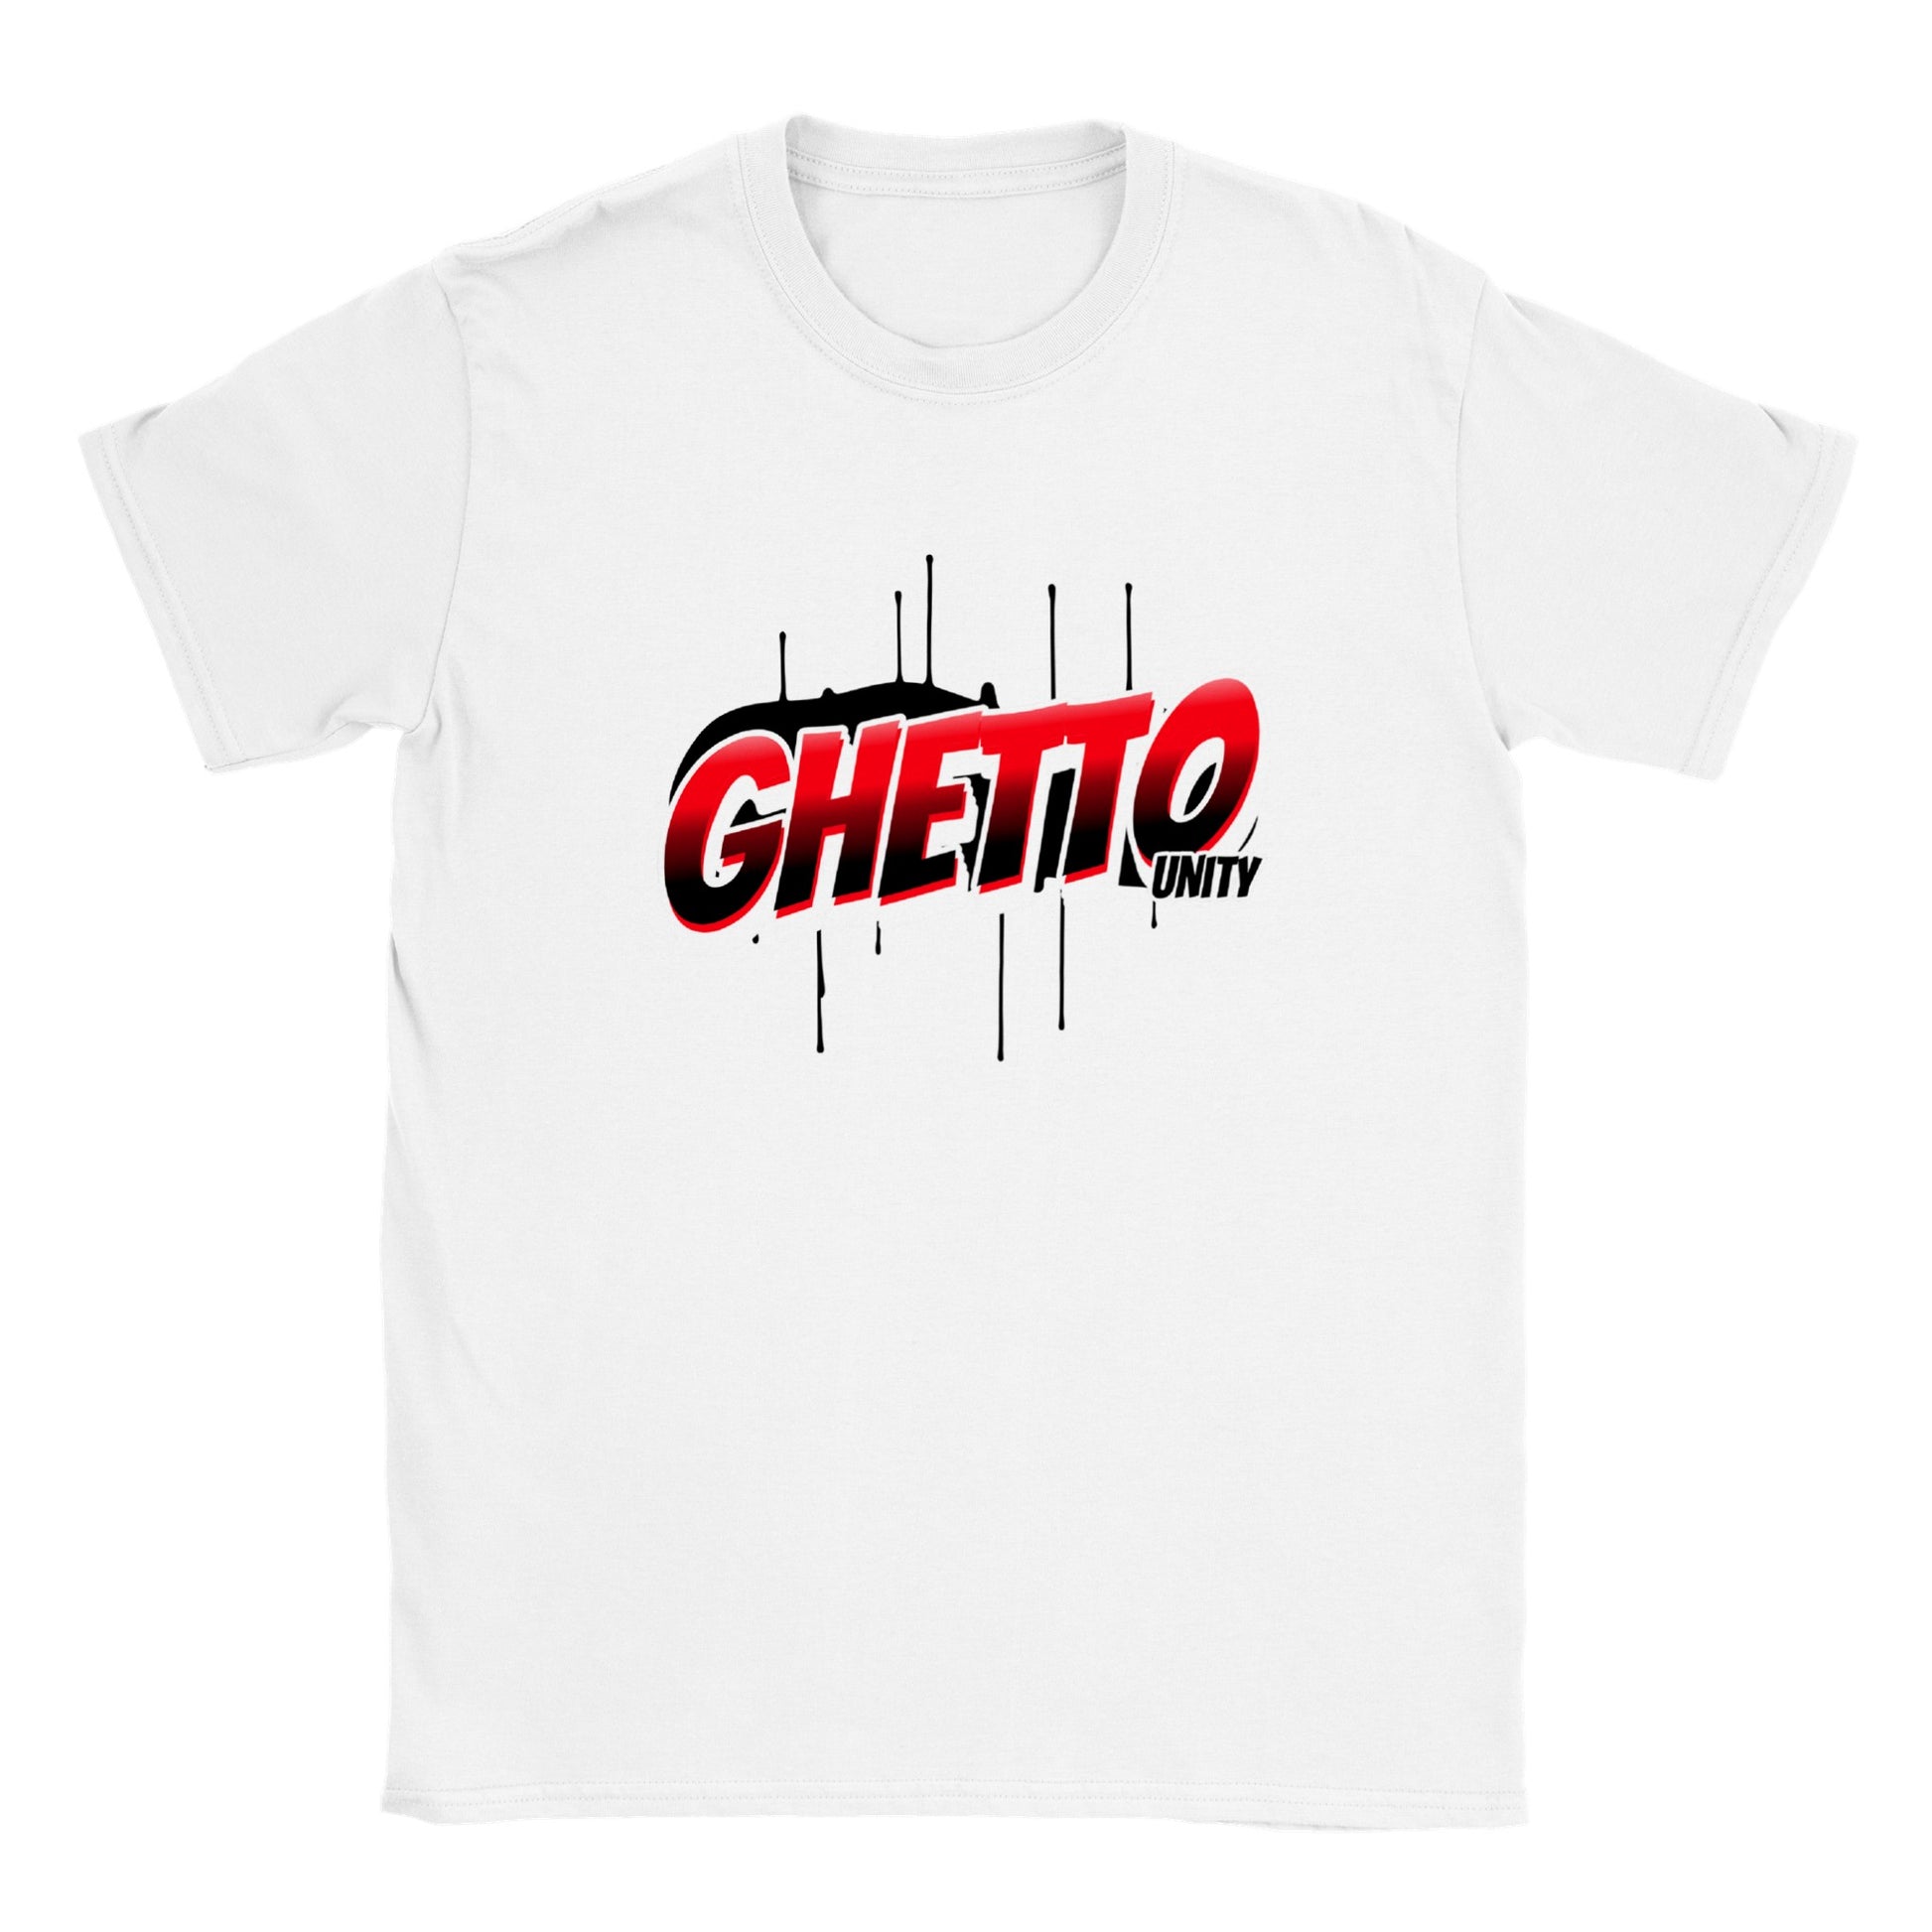 Cool men’s t-shirts uk - dress hood street- ghetto unity